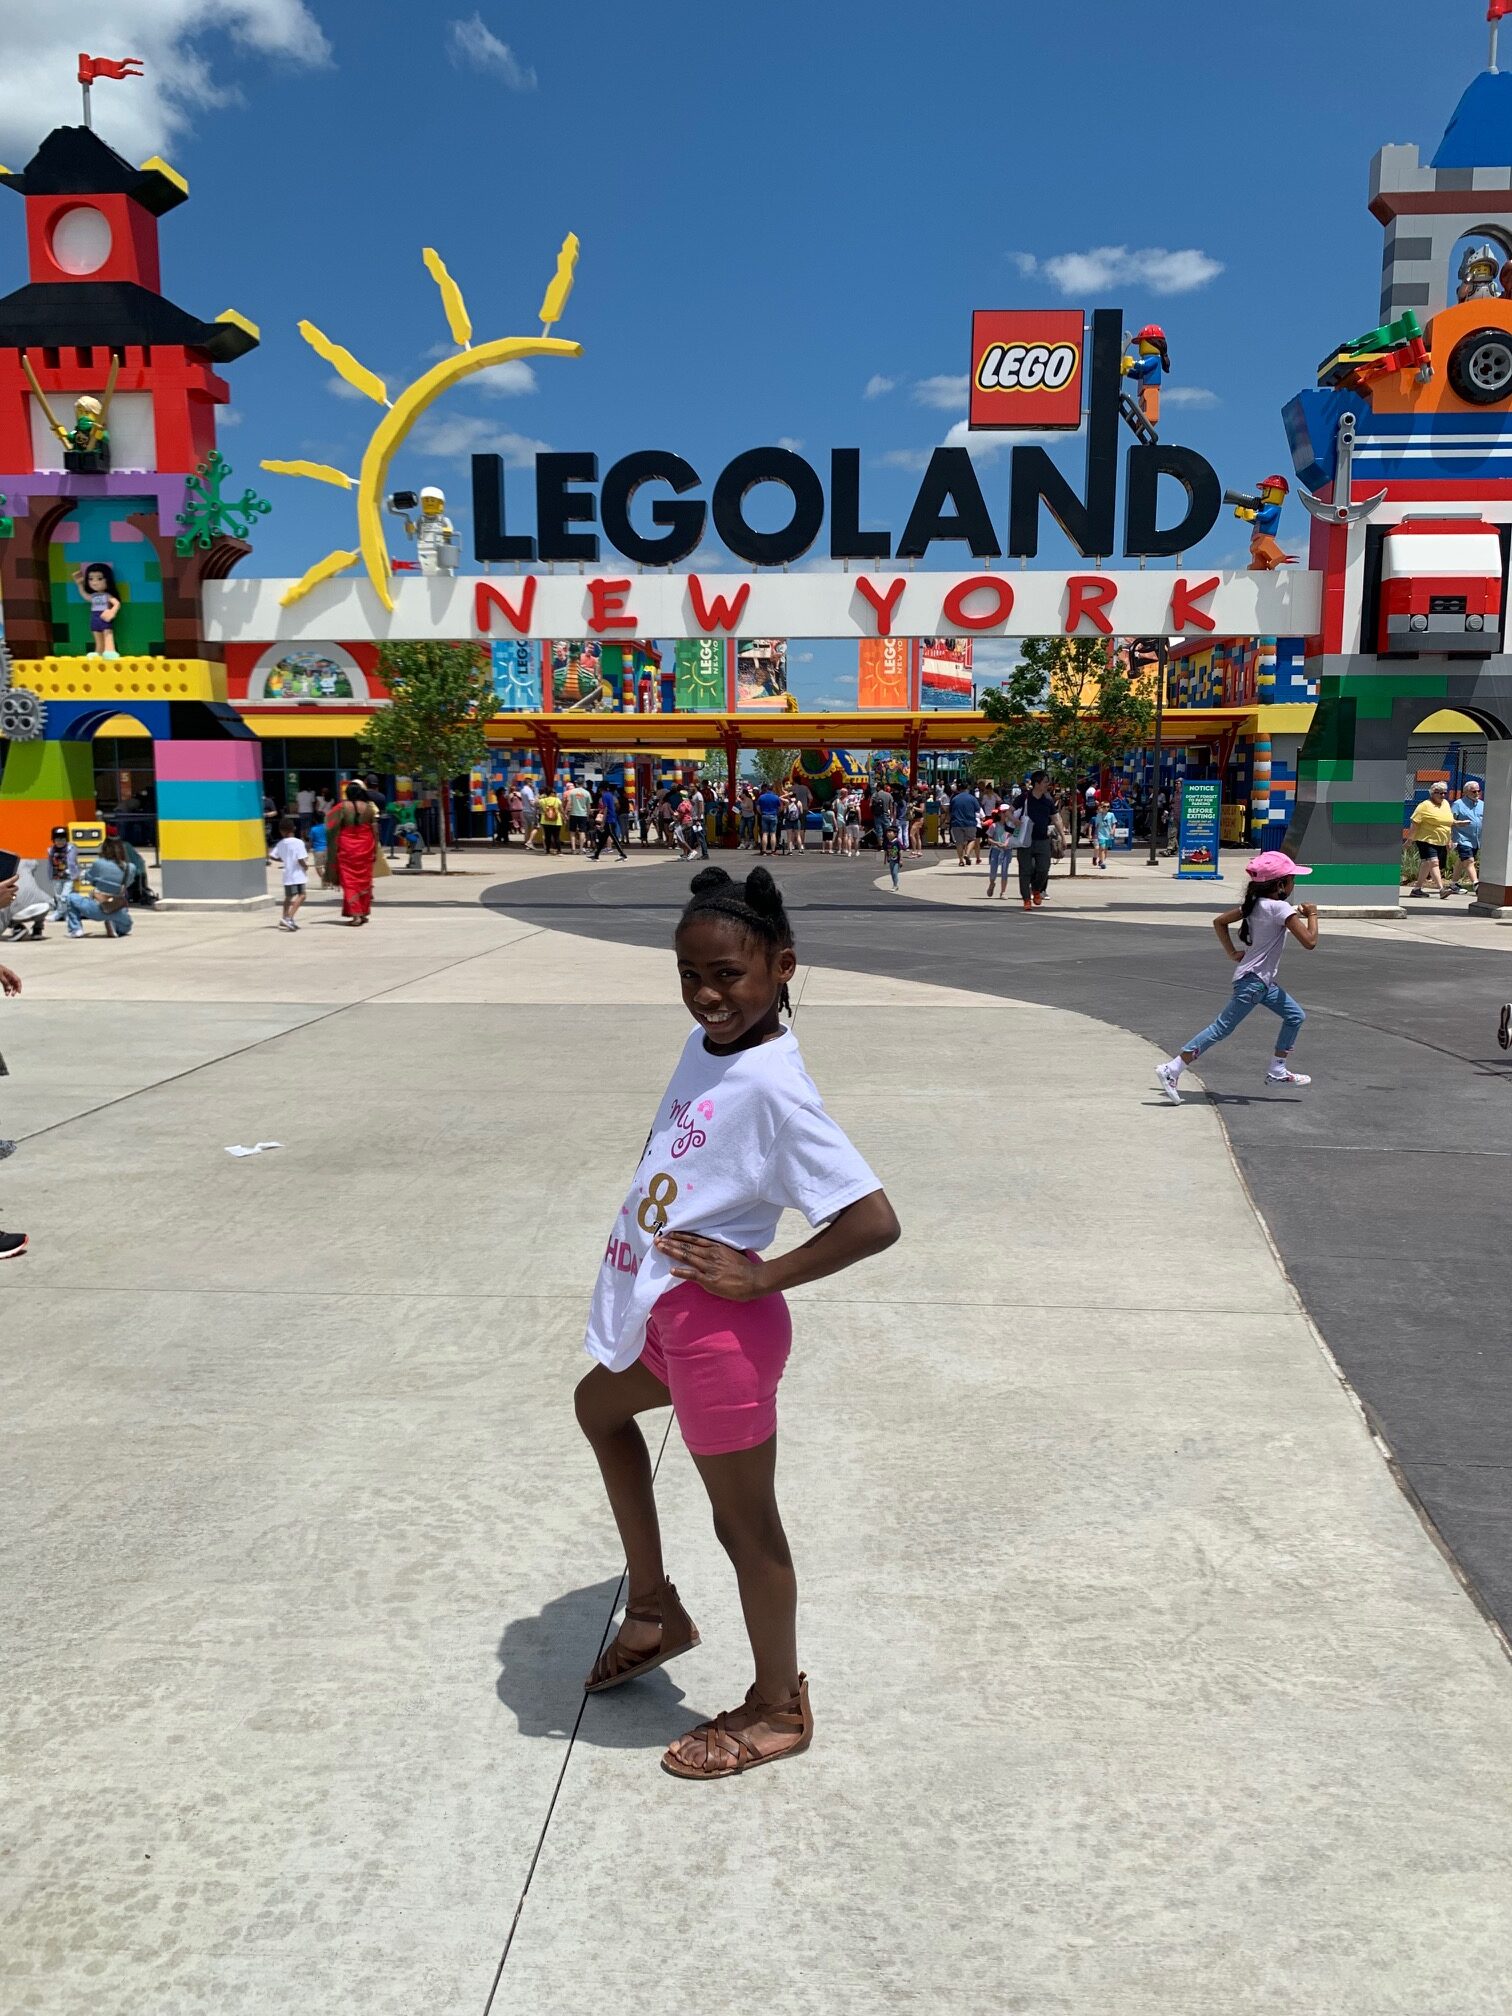 Legoland NYGreat tips to help you plan your trip. LaTasha J. Summerlin